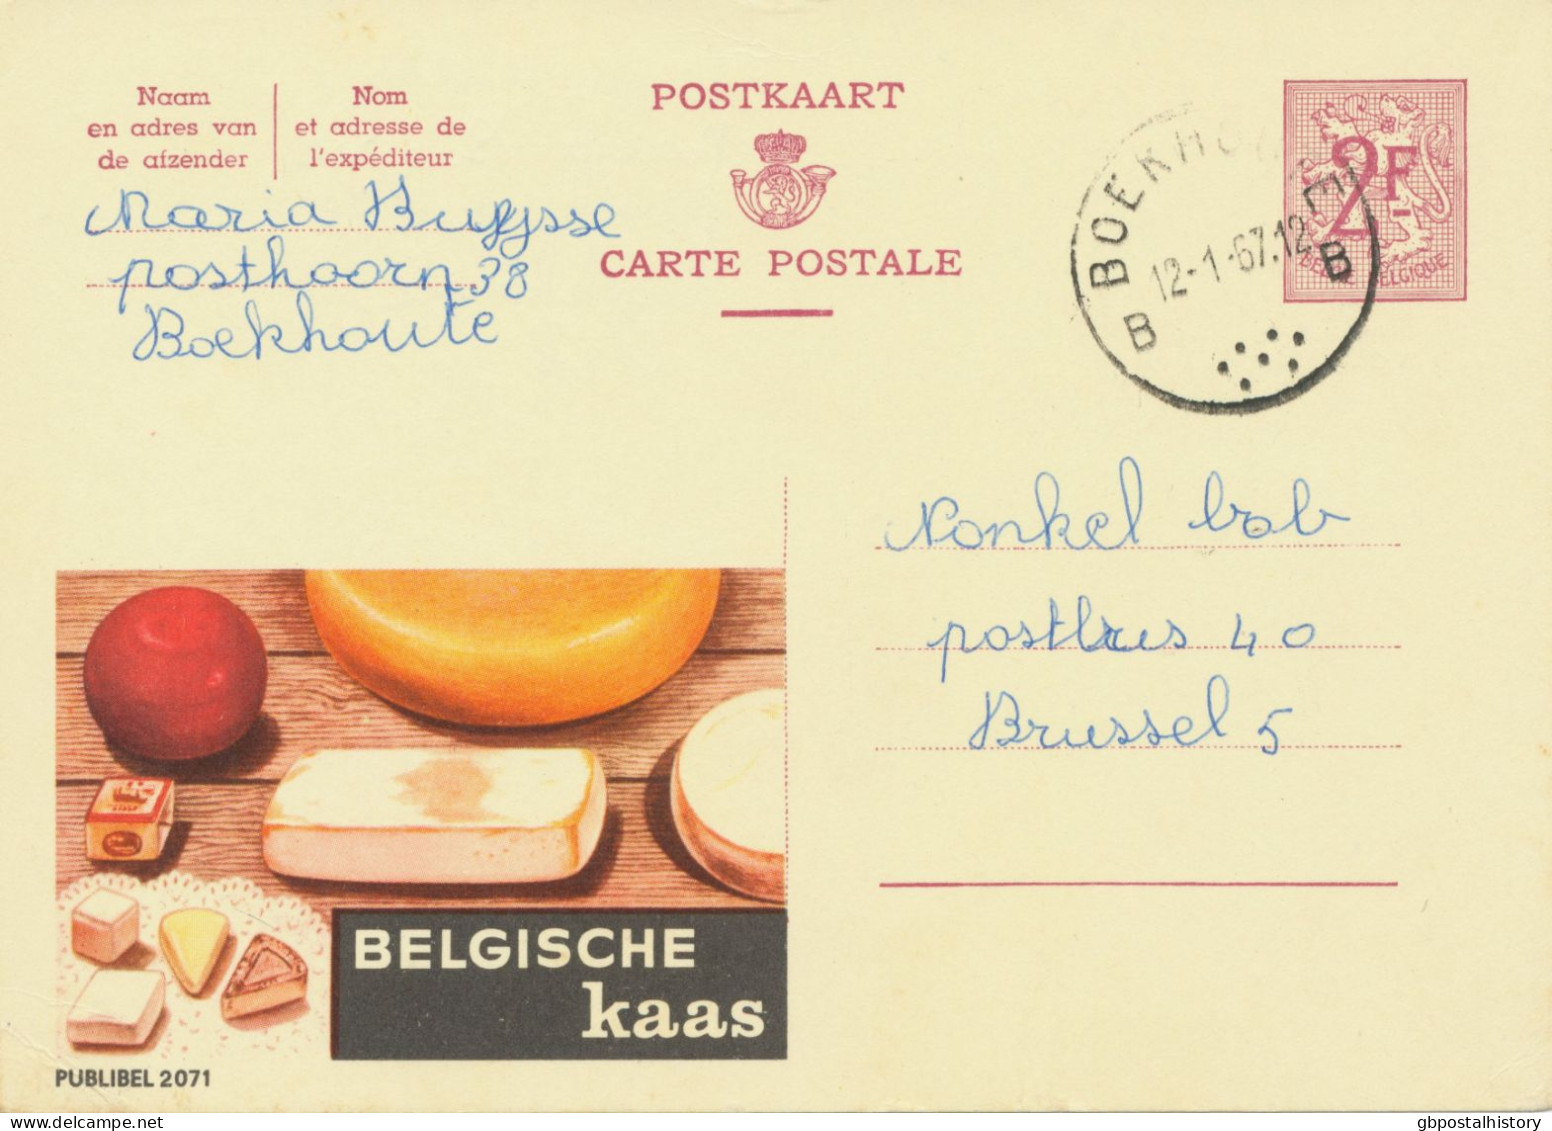 BELGIUM VILLAGE POSTMARKS  BOEKHOUTE B (now Assenede) SC With Dots 1967 (Postal Stationery 2 F, PUBLIBEL 2071) - Oblitérations à Points